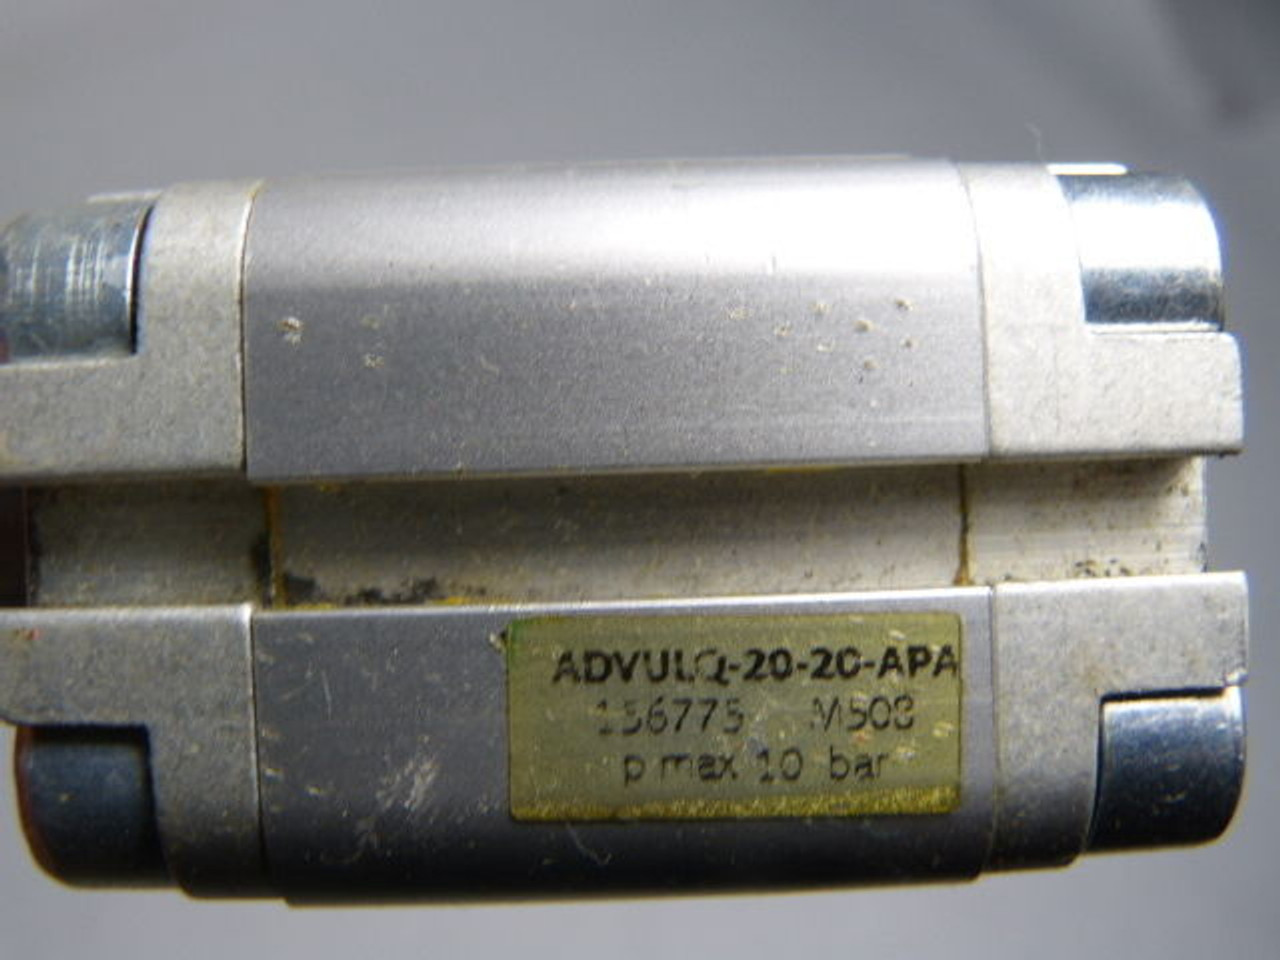 Festo 156603 ADVULQ-20-20-APA Compact Pneumatic Cylinder 10 Bar USED